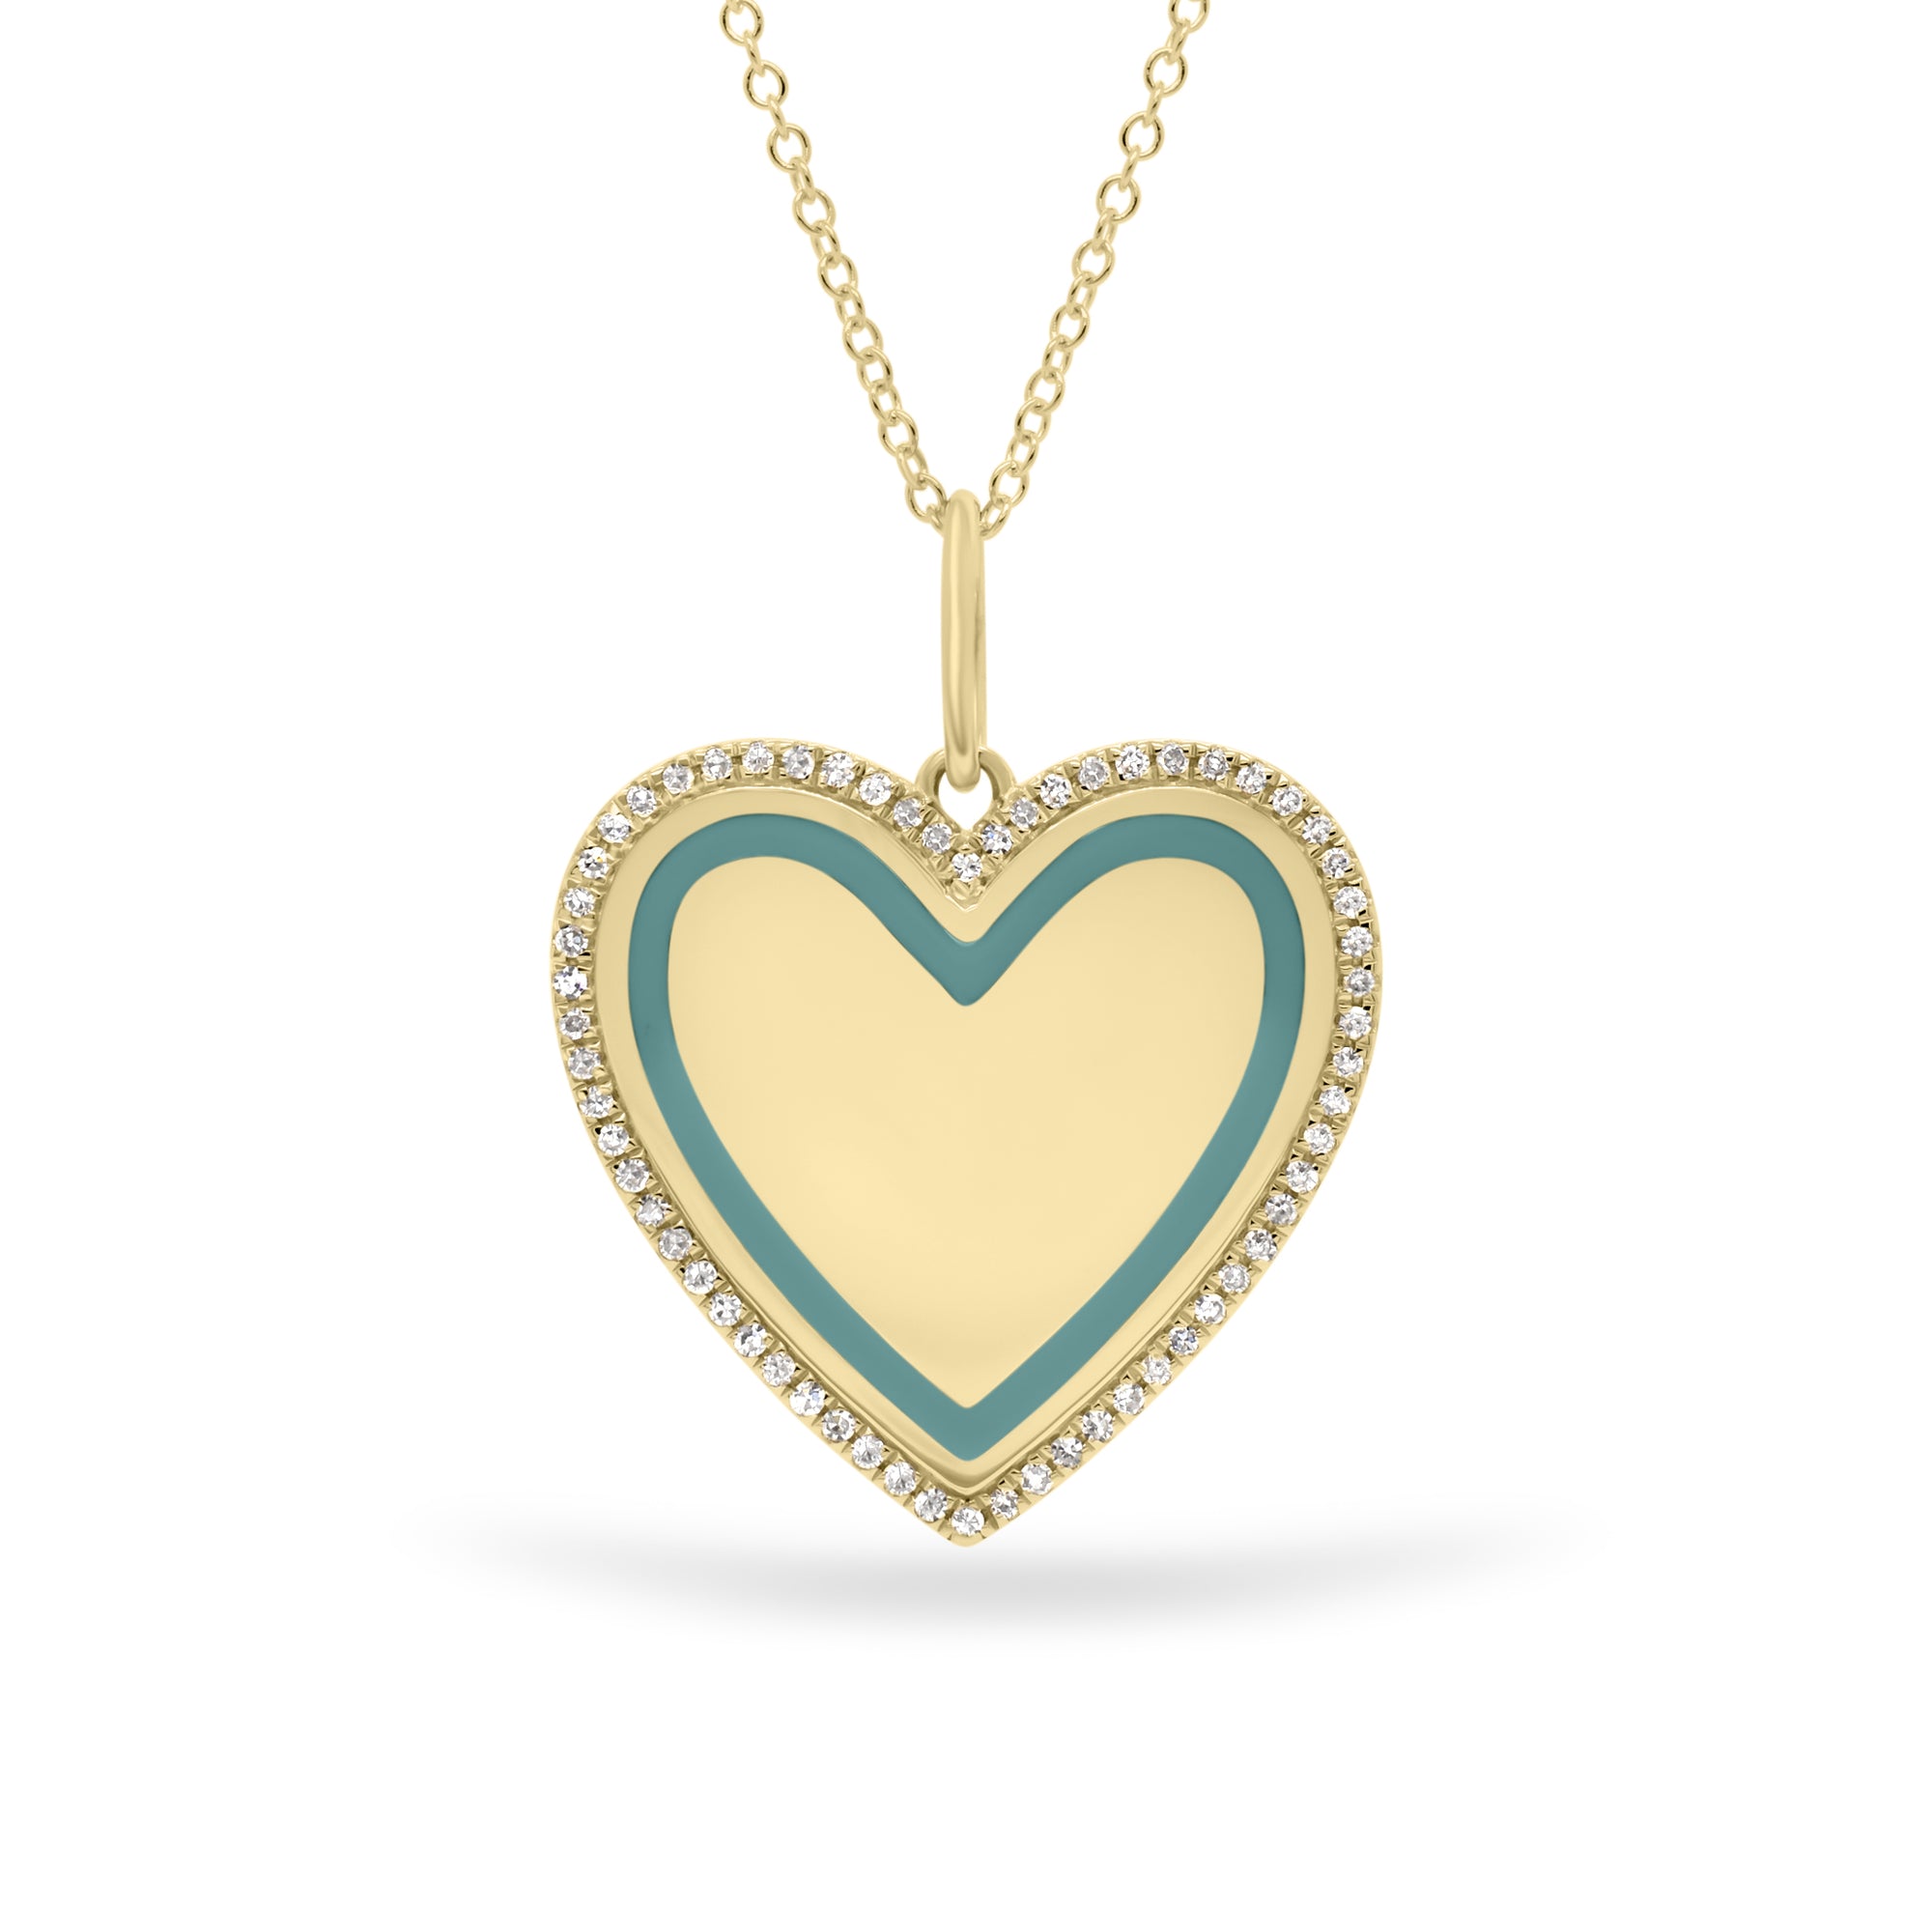 Diamond & Enamel Heart Pendant - 14K yellow gold weighing 6.51 grams - 62 round diamonds totaling 0.16 carats